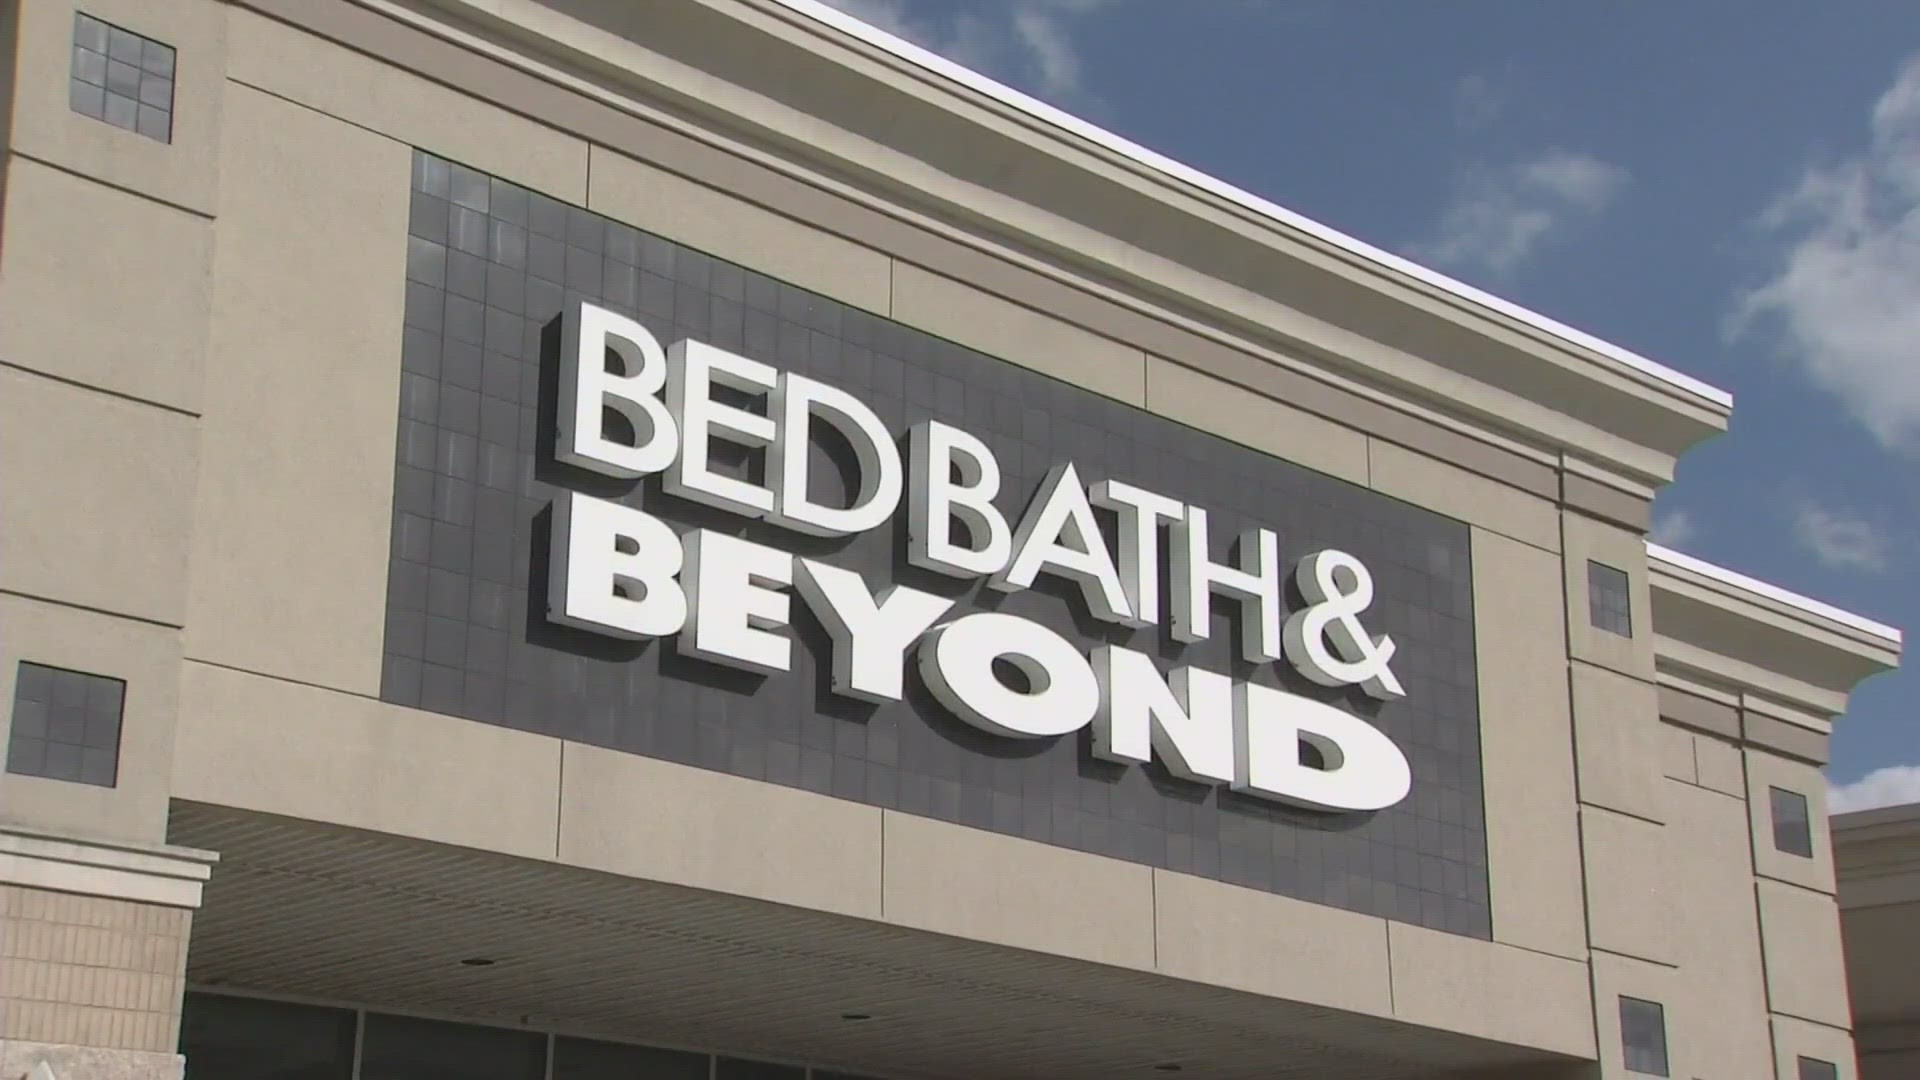 Overstock.com acquiring Bed Bath & Beyond